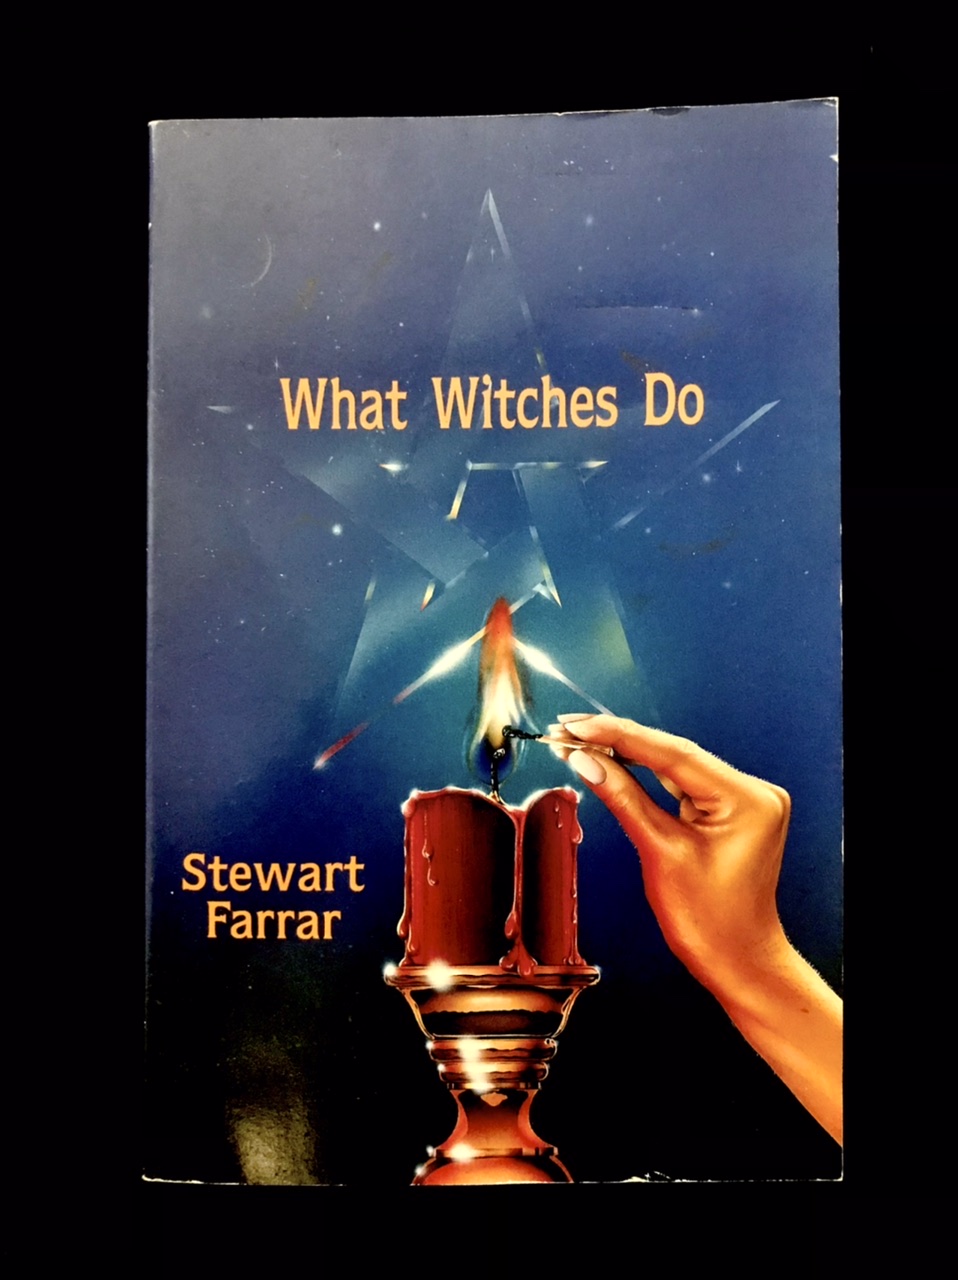 What Witches Do by Stewart Farrar